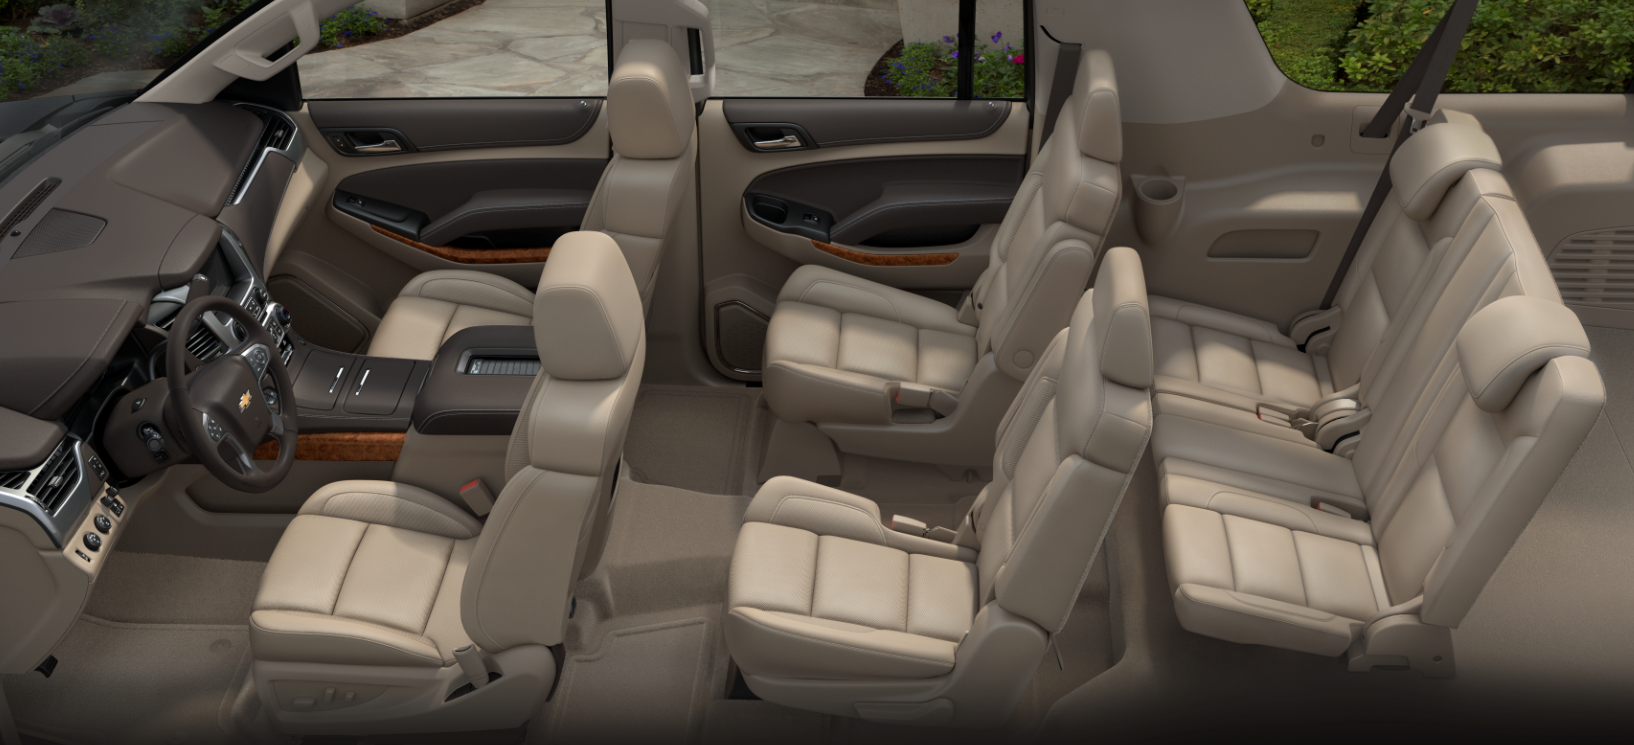 2017 Chevy Suburban interior